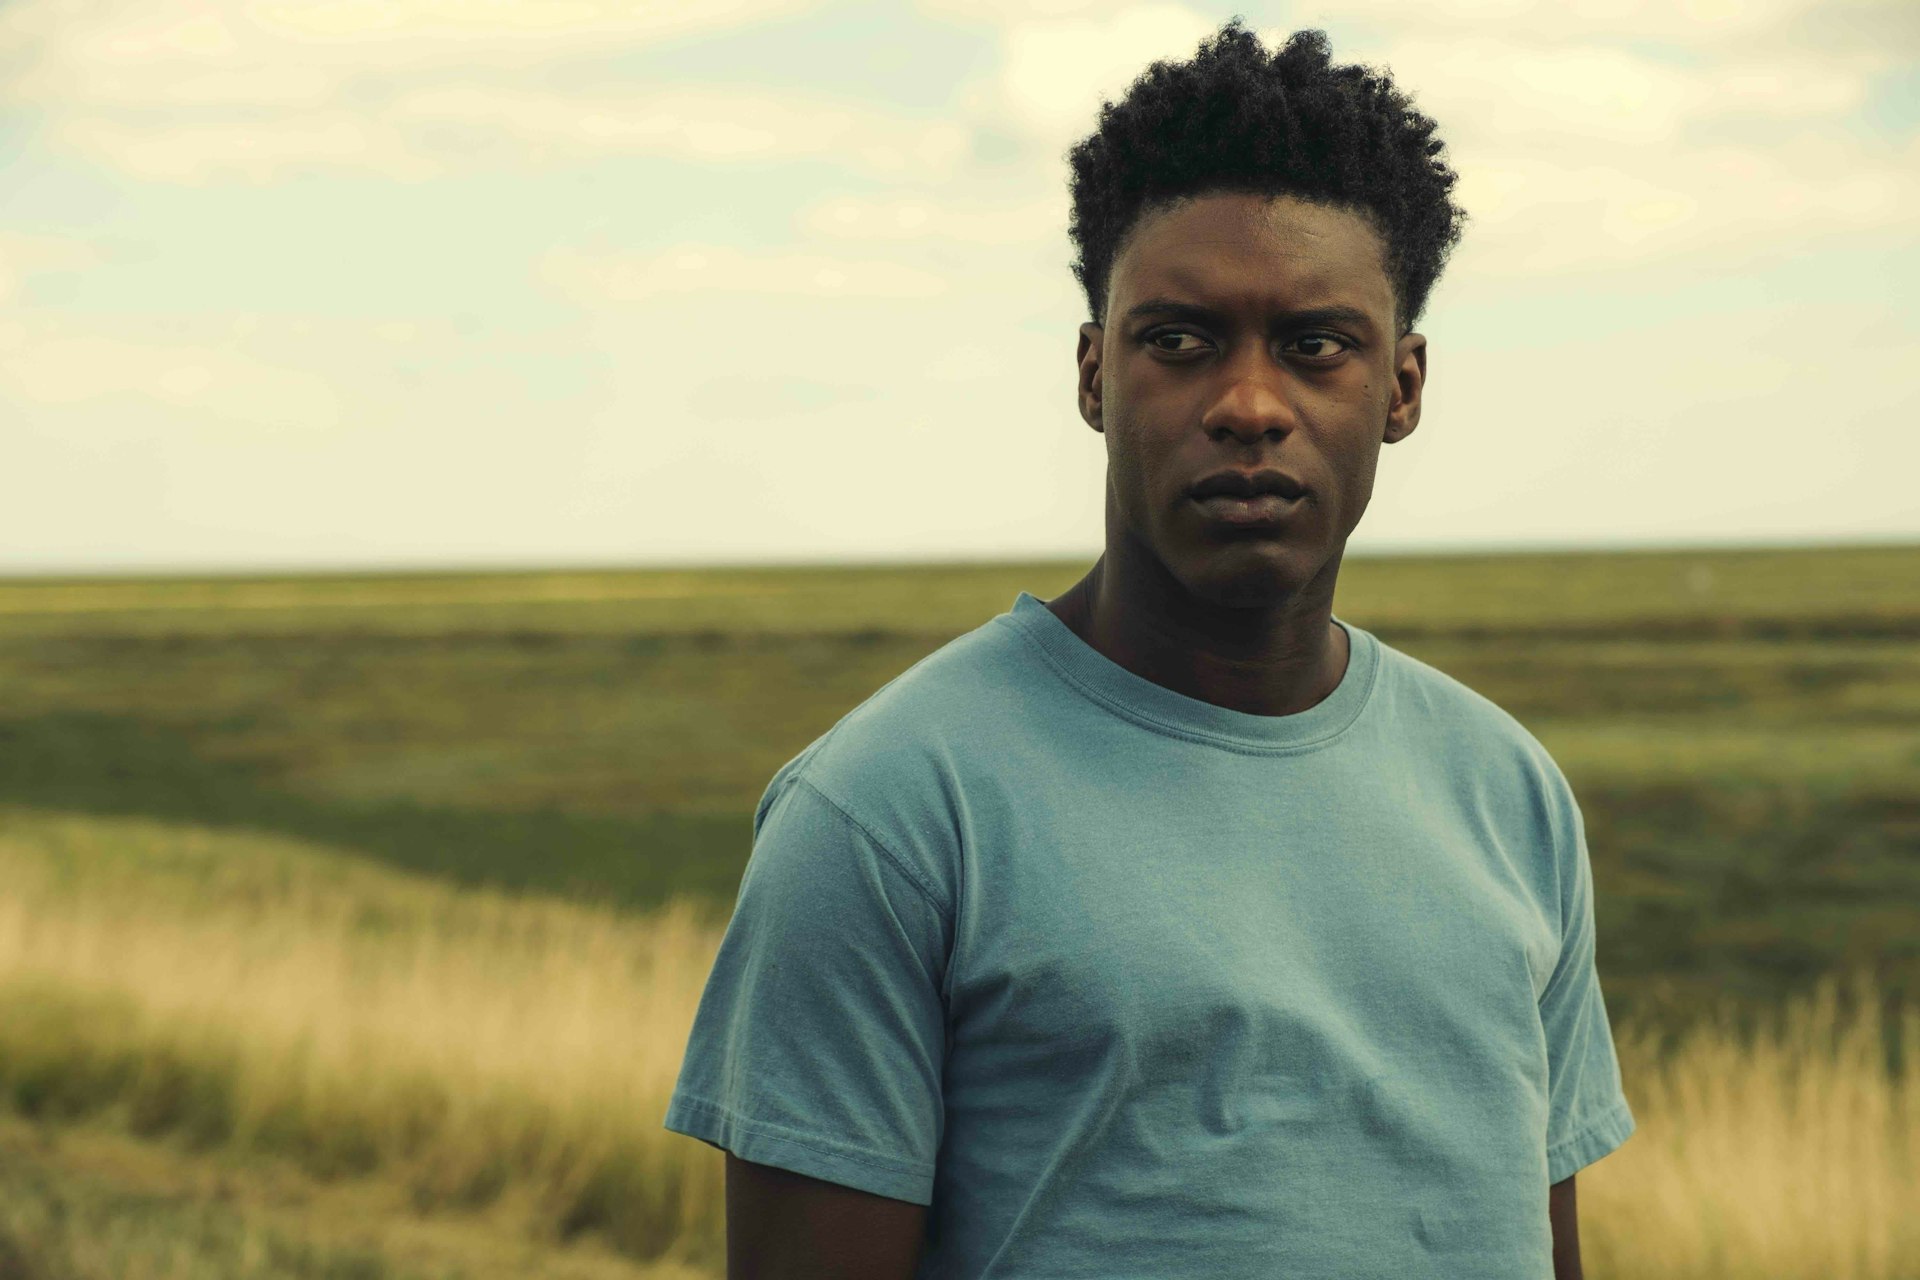 The film exploring masculinity and black British identity